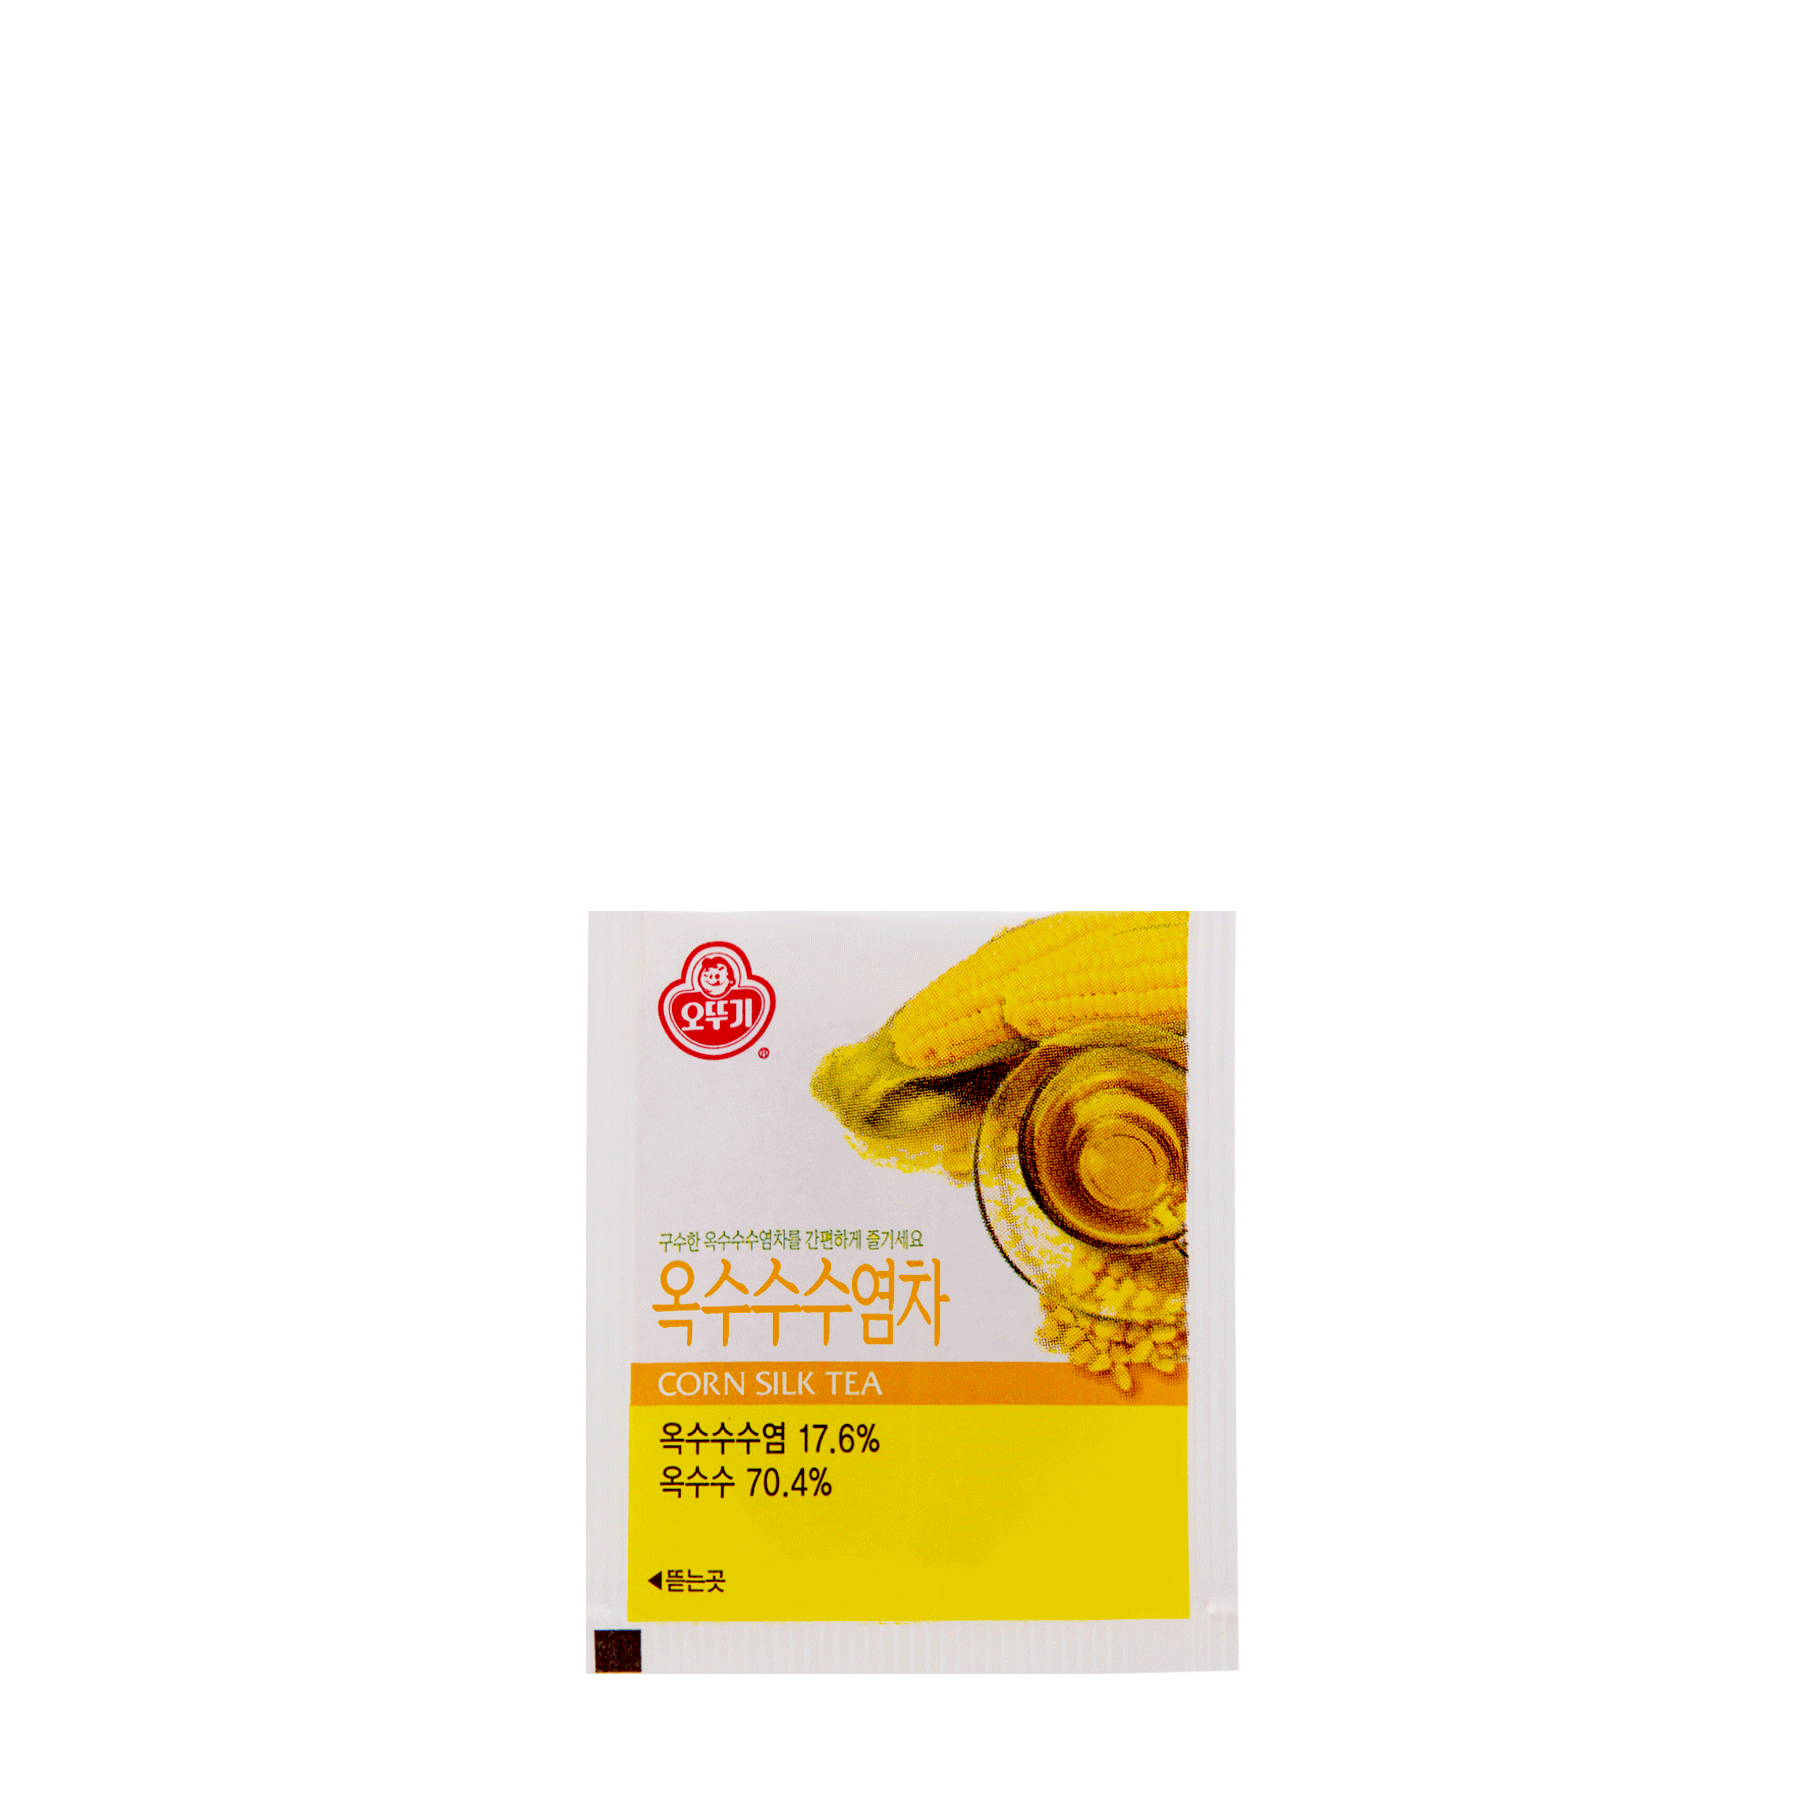 Corn Silk Tea [40EA/BOX]